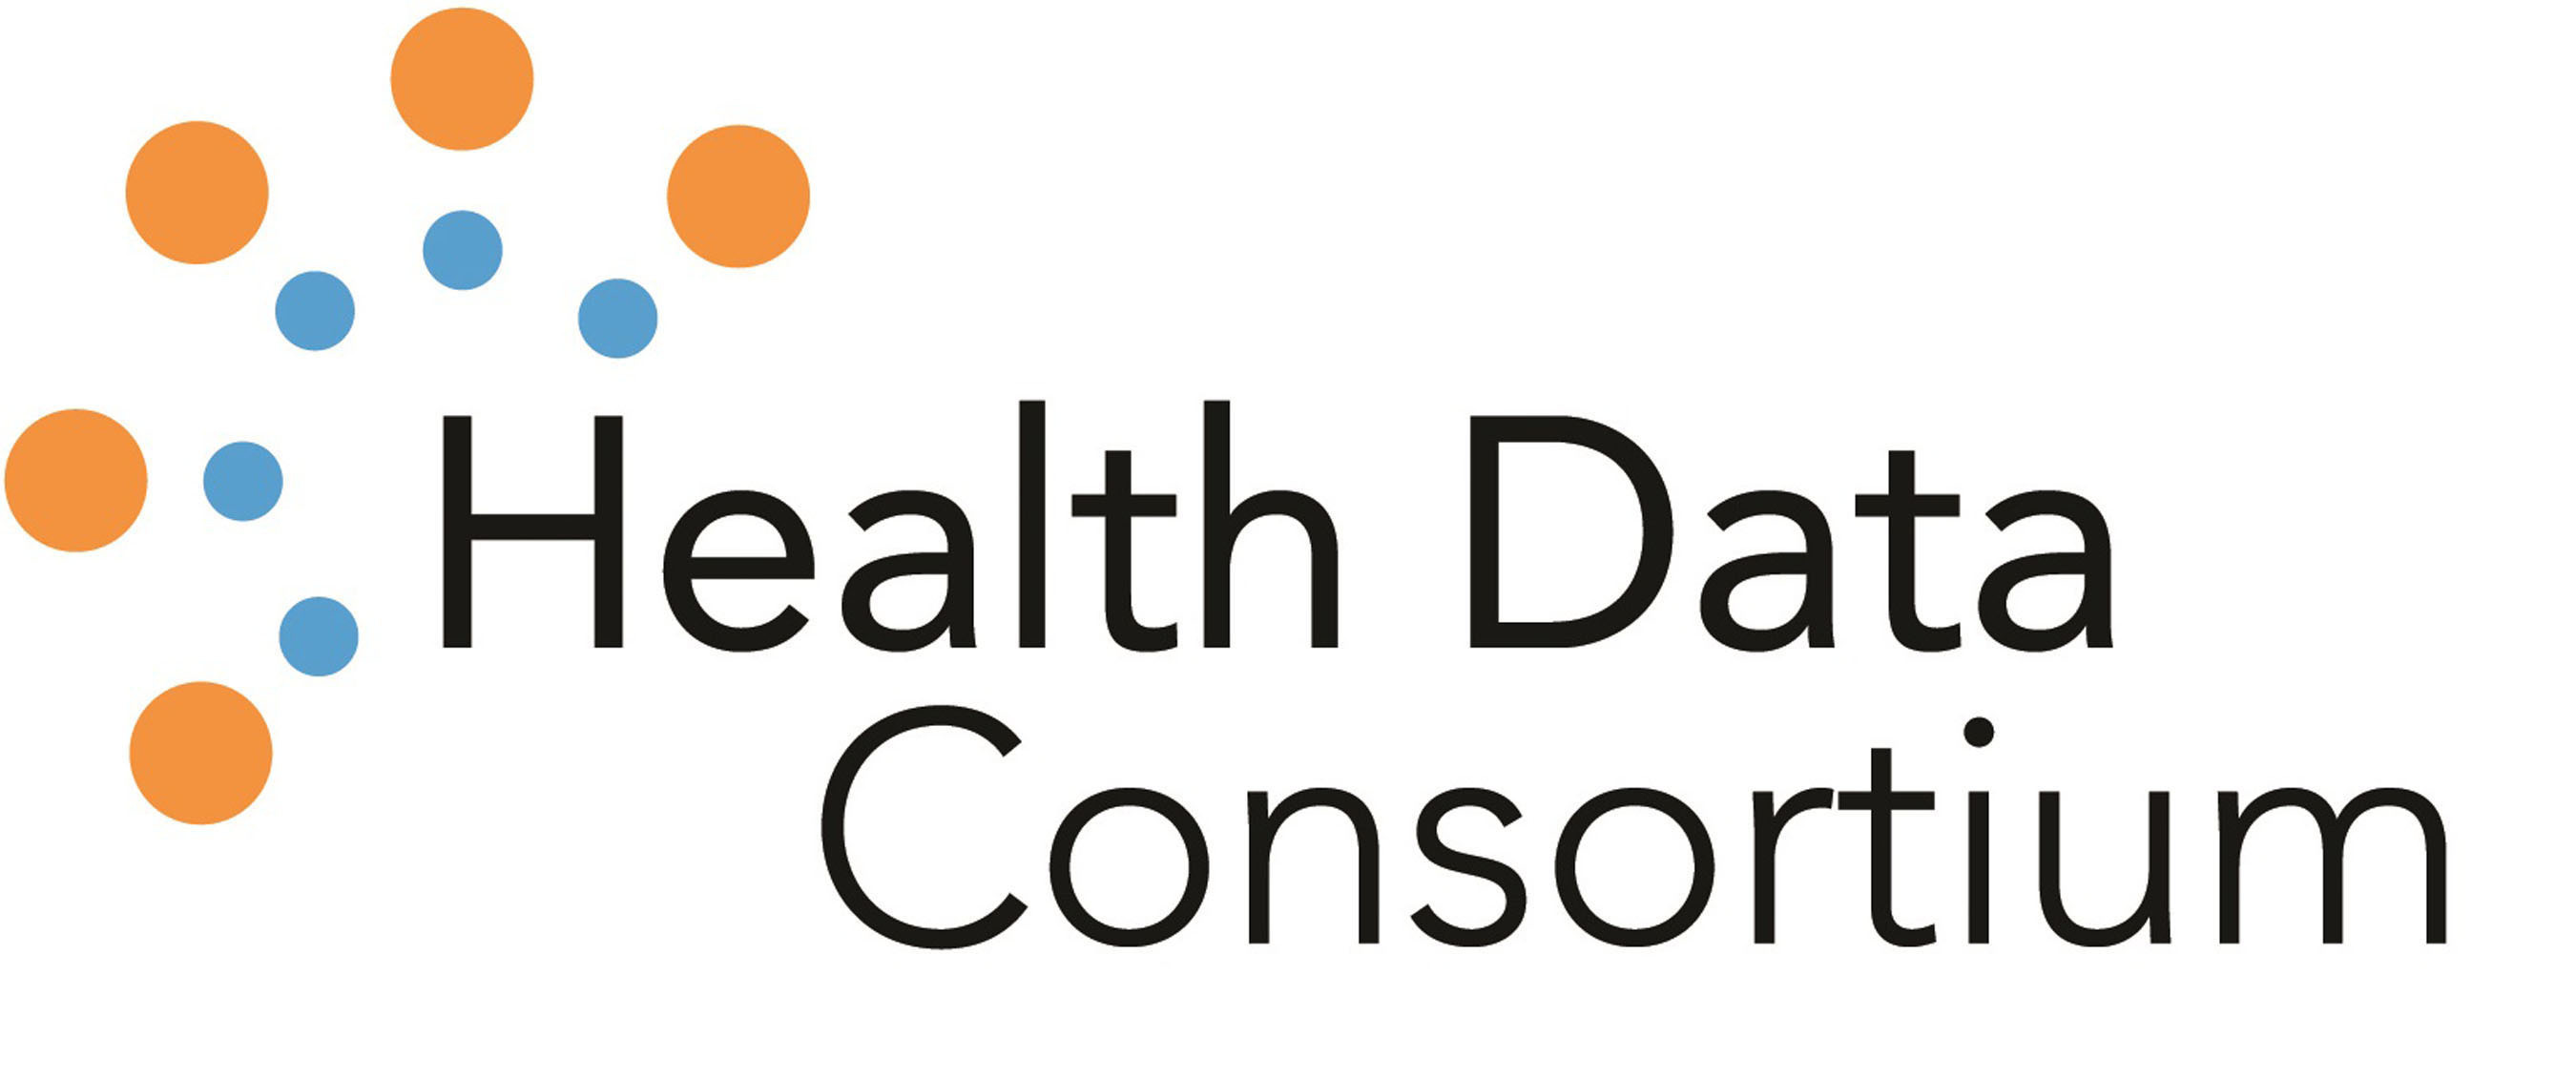 Health Data Consortium Logo. (PRNewsFoto/Health Data Consortium) (PRNewsFoto/)